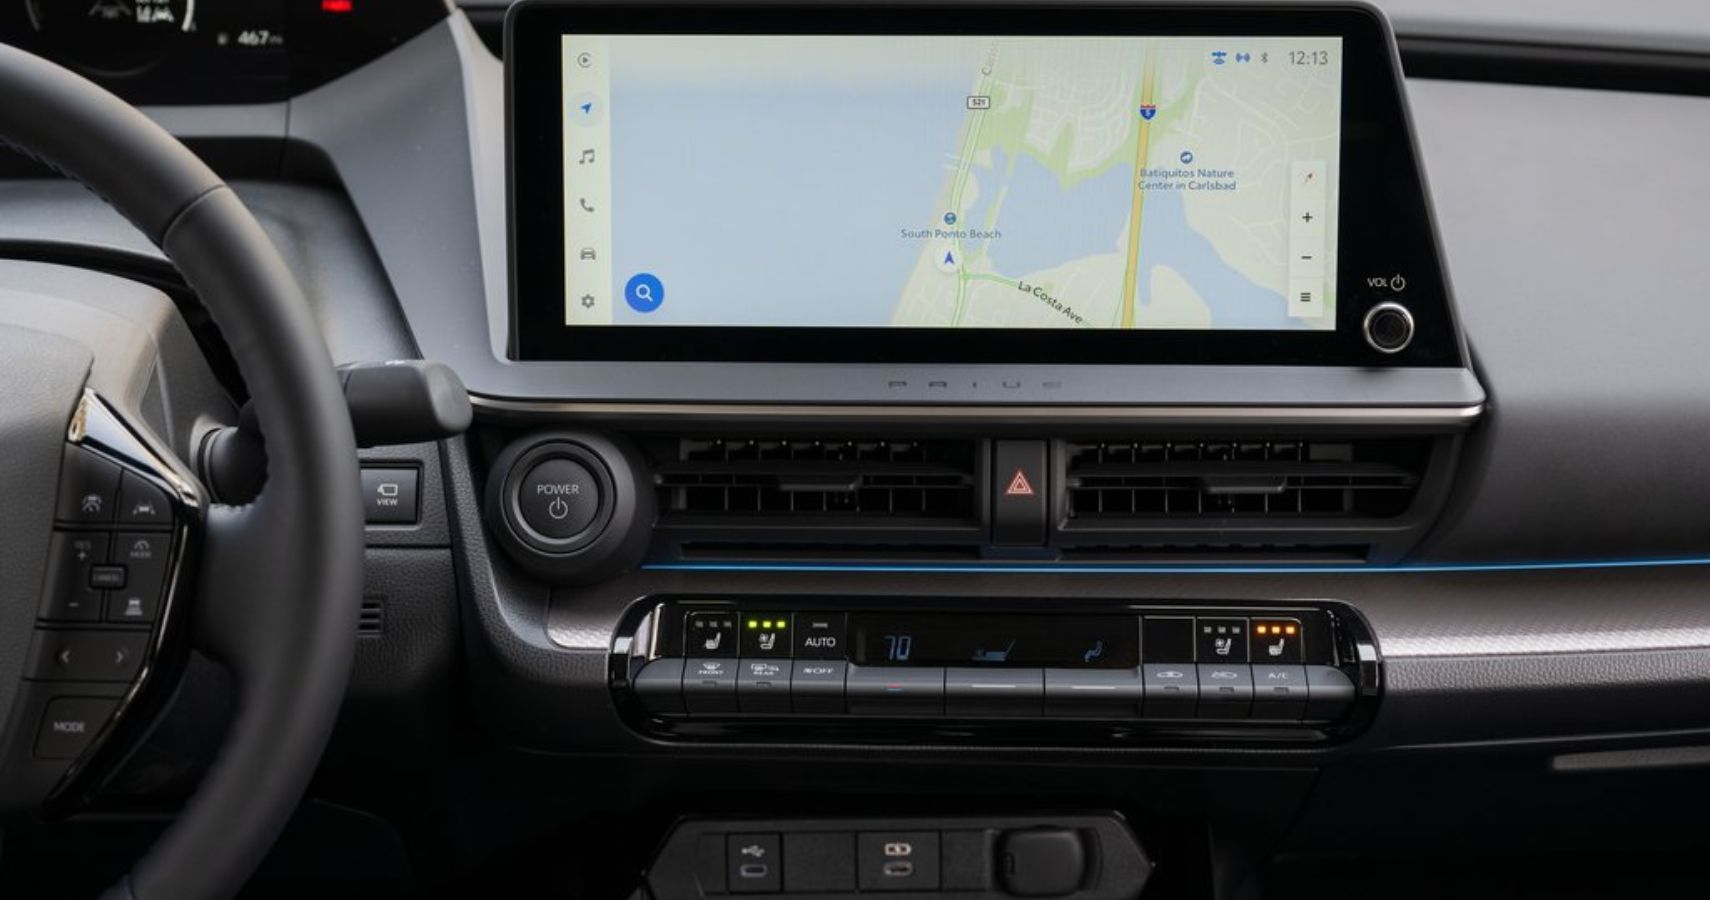 2023-toyota-prius-interior-dashboard-infotainment-screen